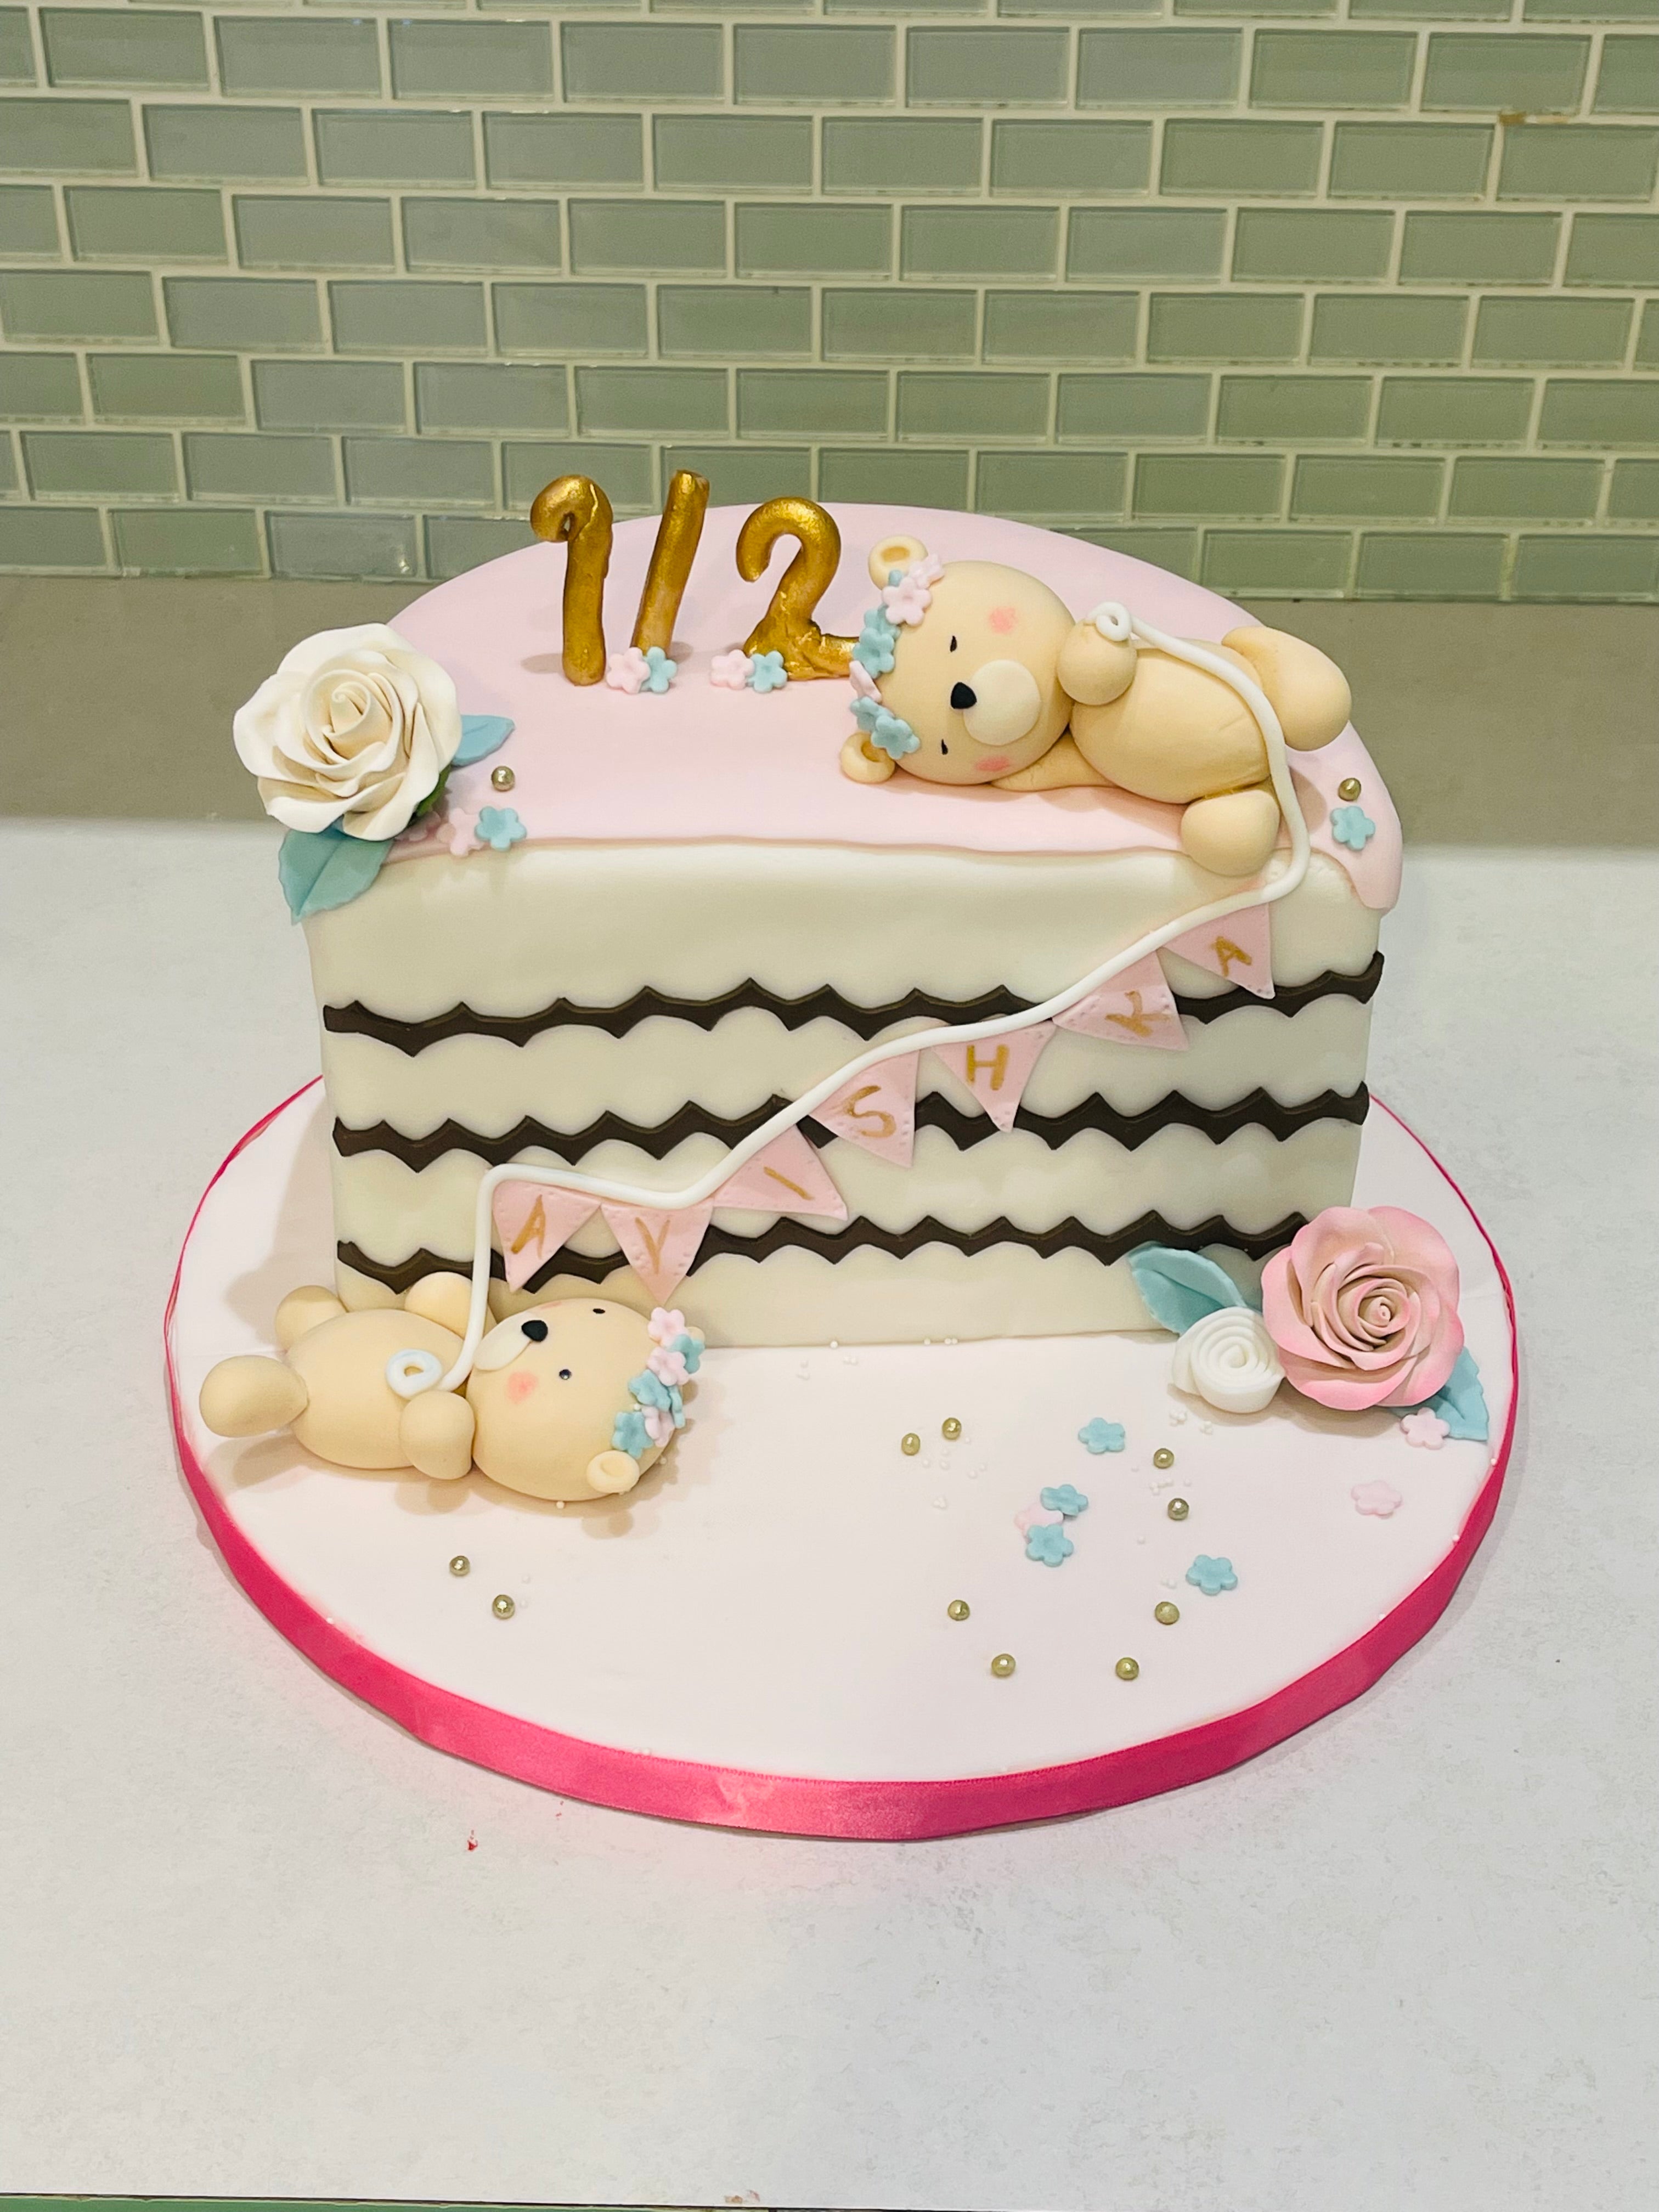 Half Year Celebration Cake